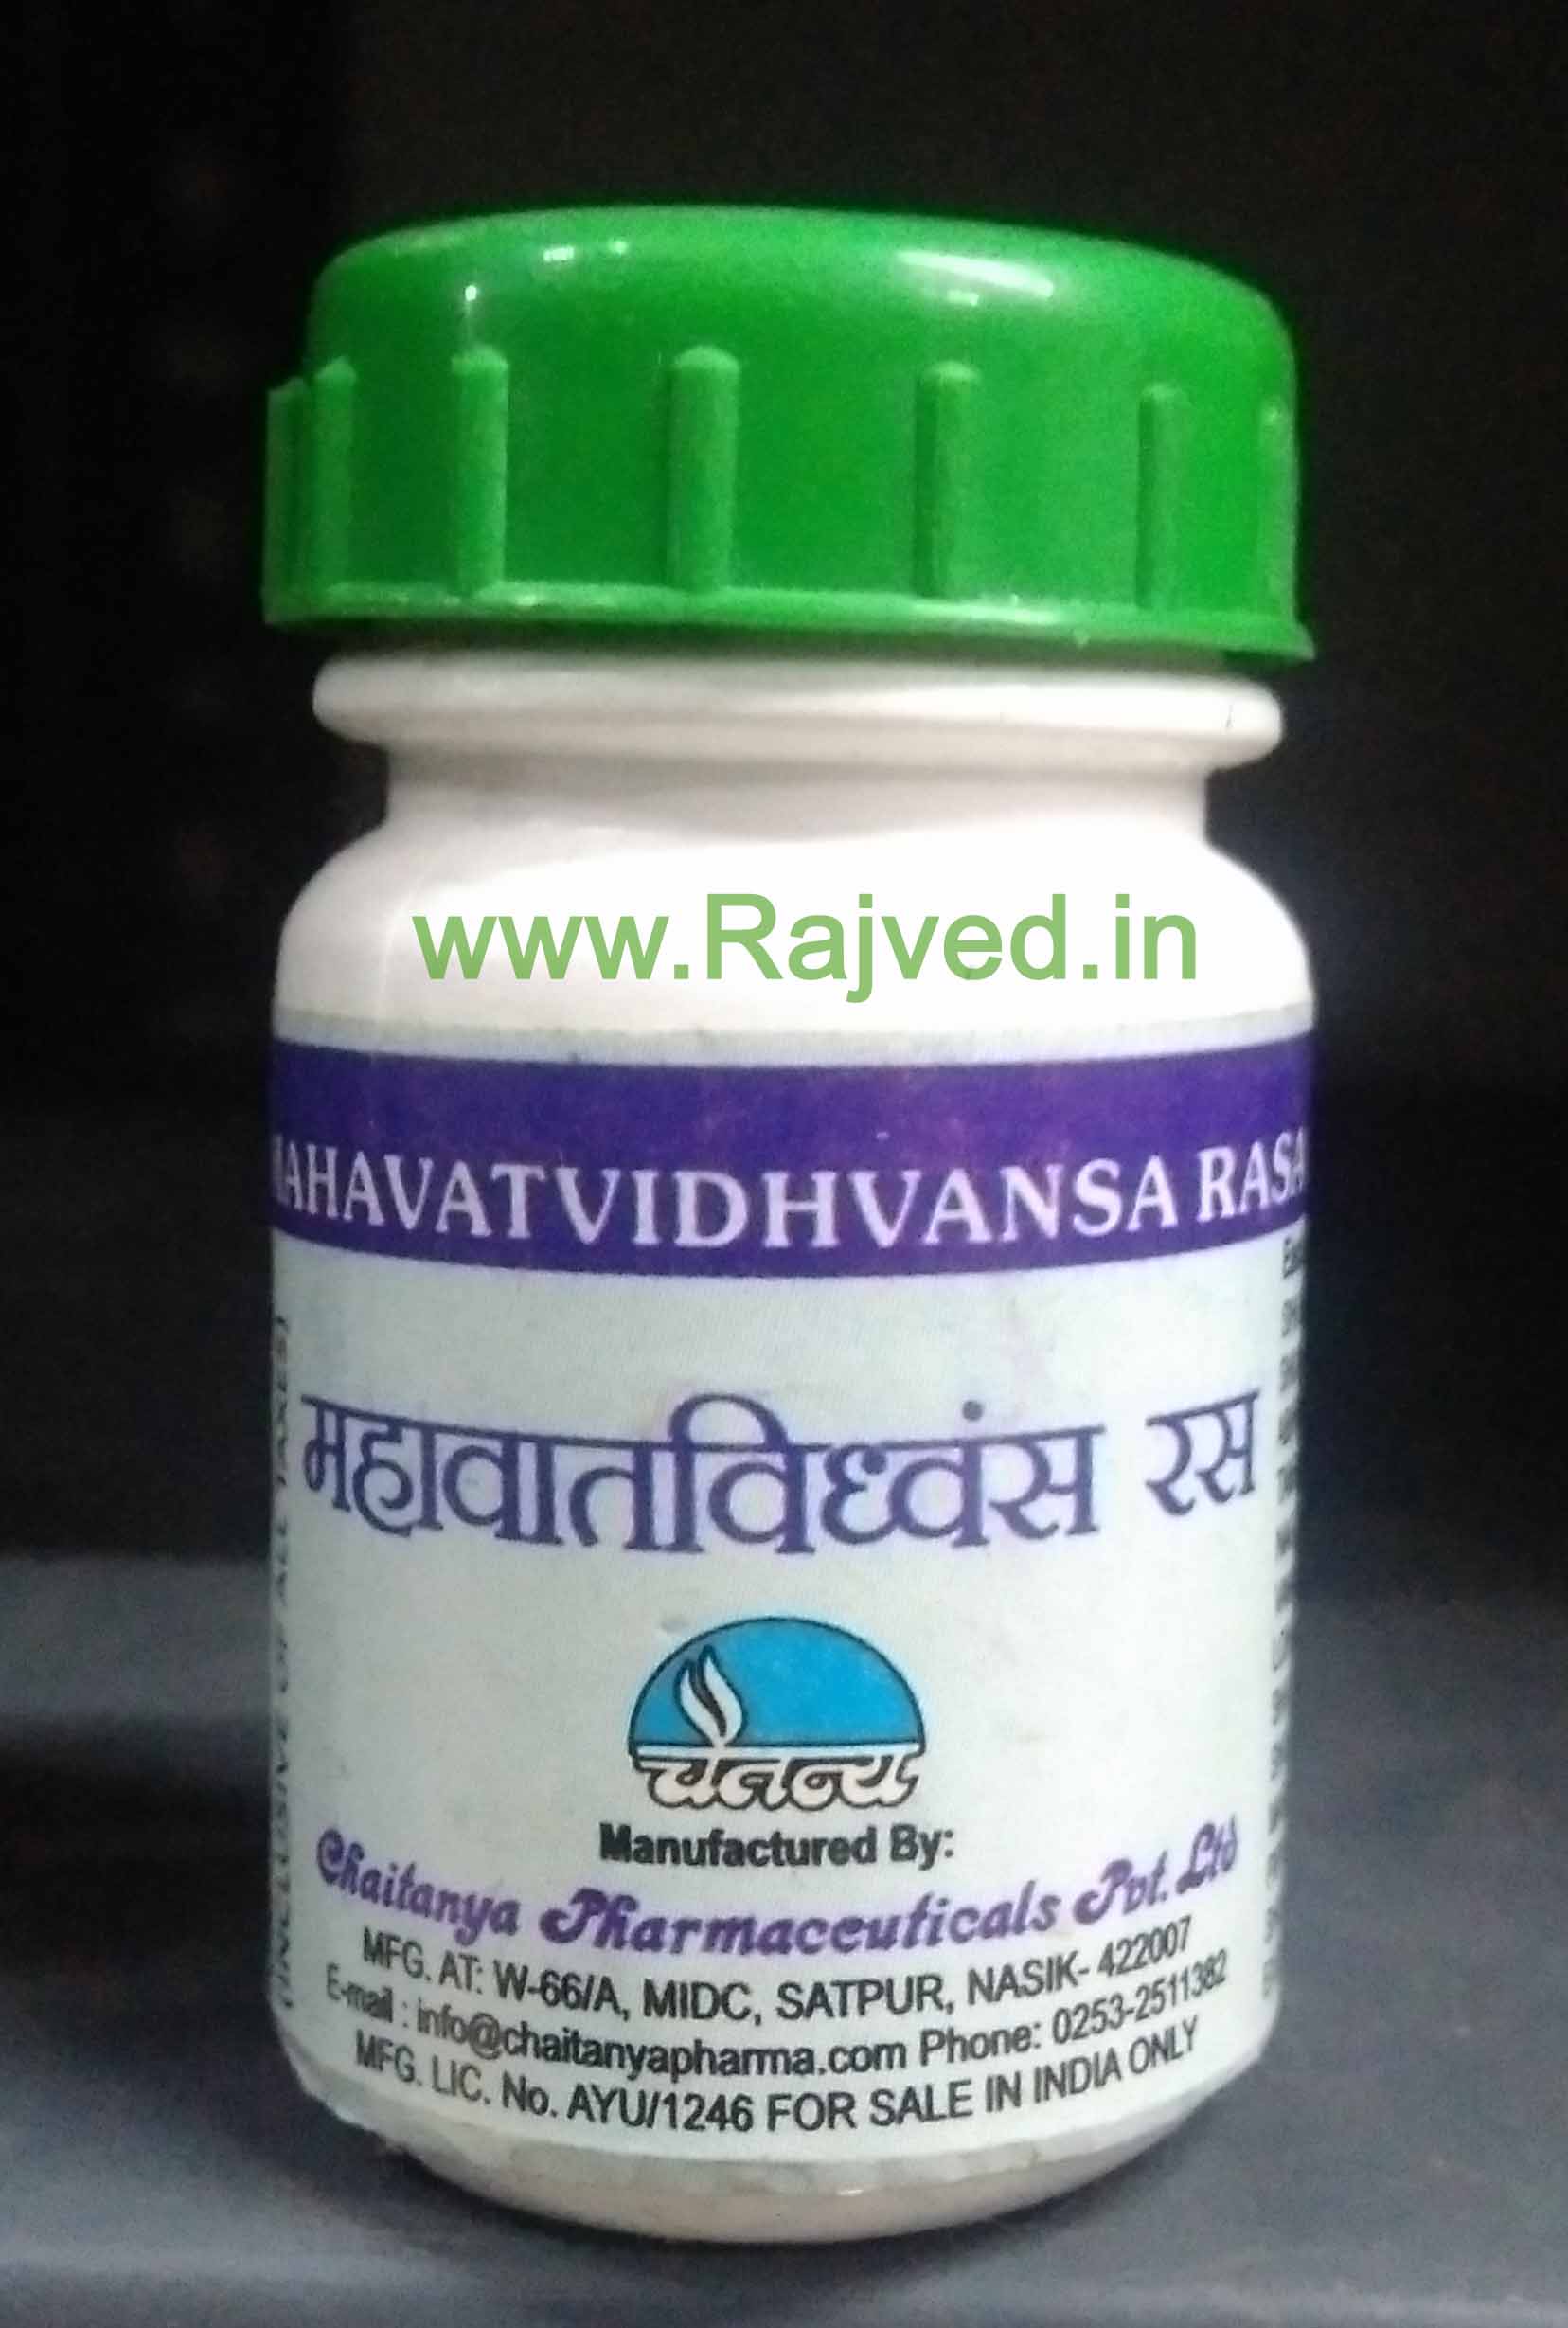 mahavatvidhvansa rasa 1000 tab upto 20% off free shipping chaitanya pharmaceuticals